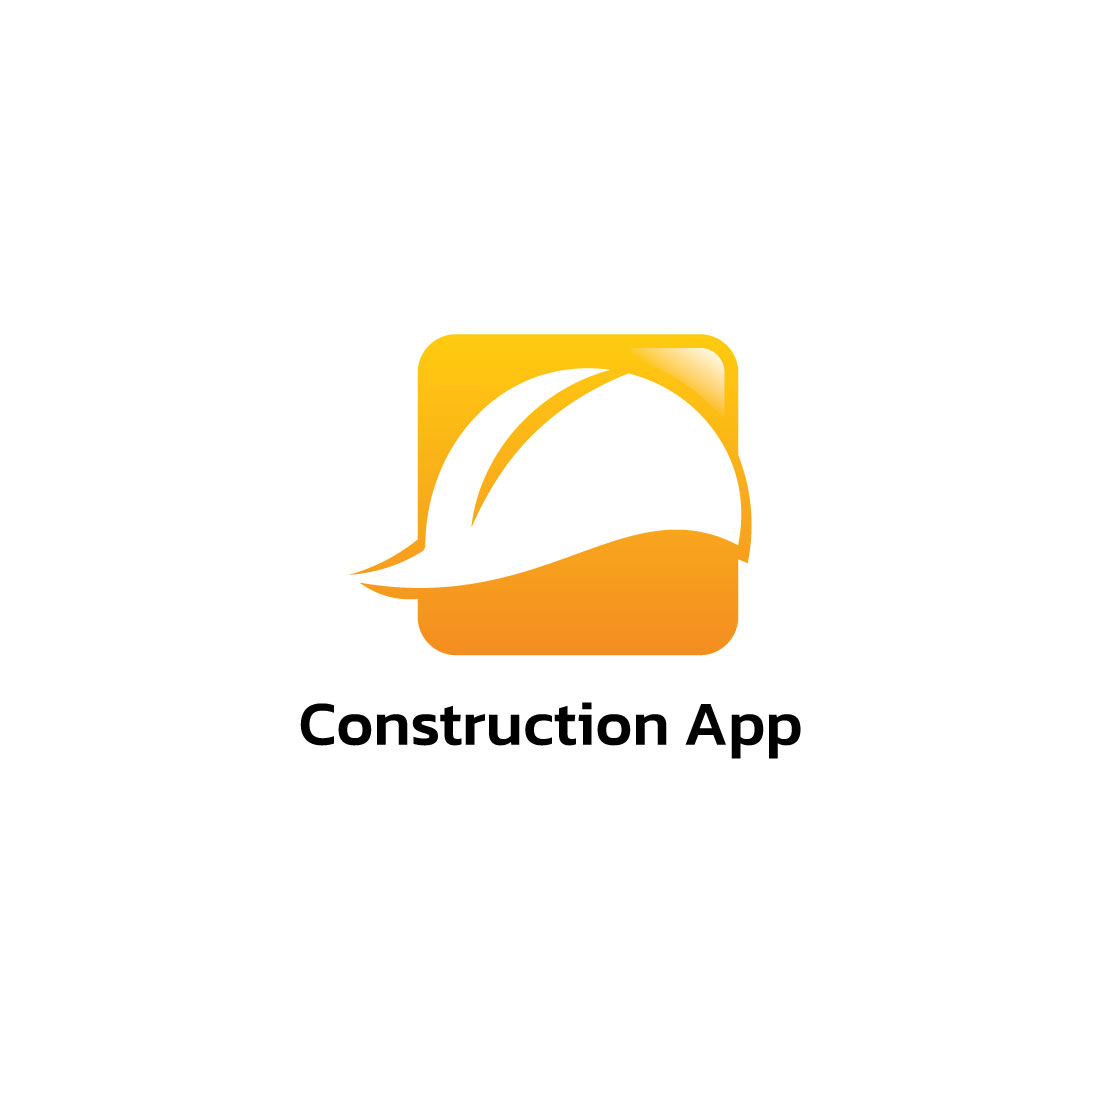 Professional Construction App Logo design preview image.